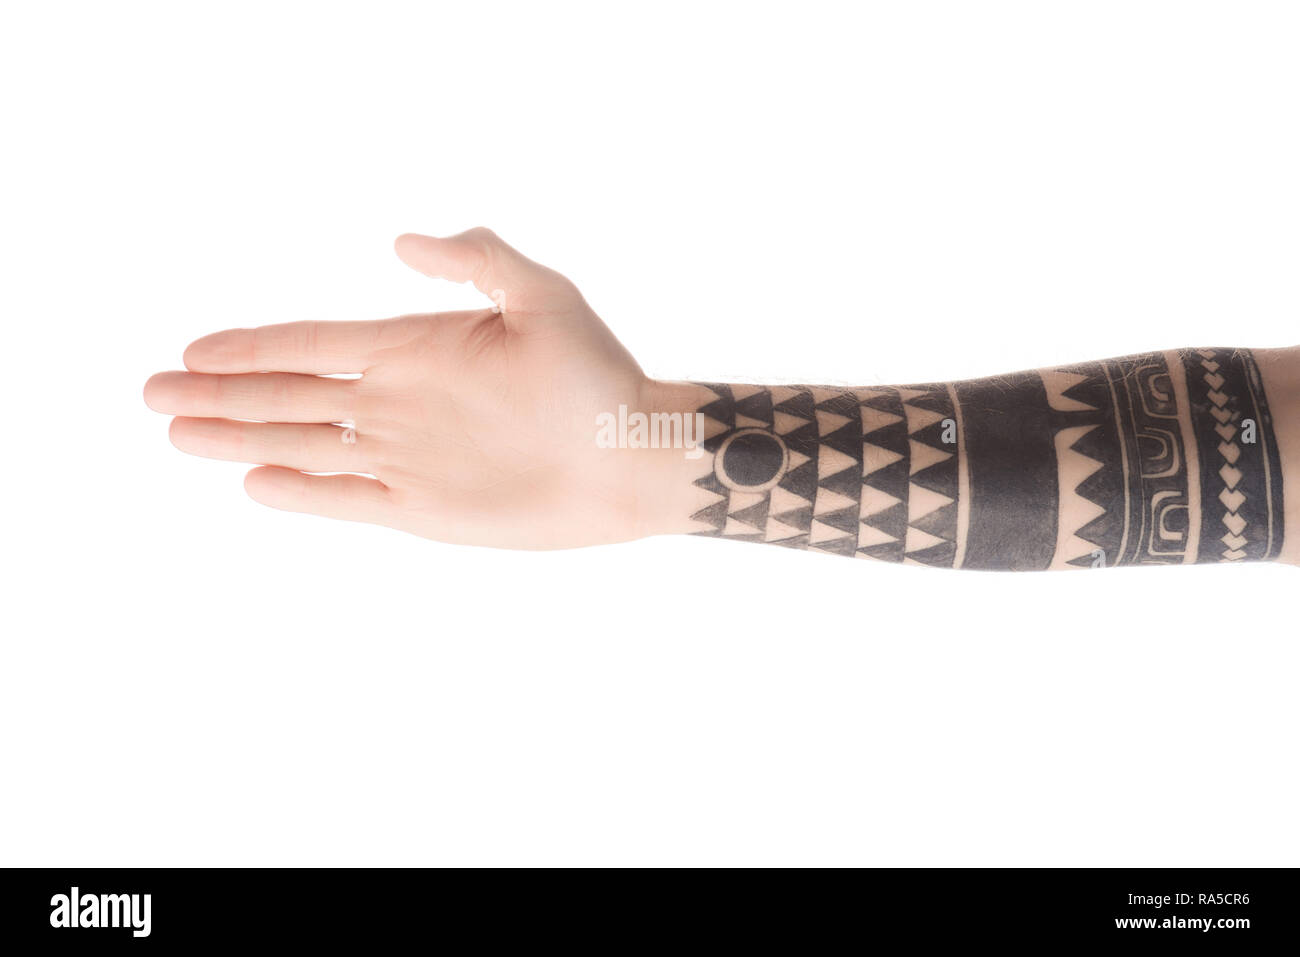 White on Black Tattoo: You can tattoo white over black • Tattoodo